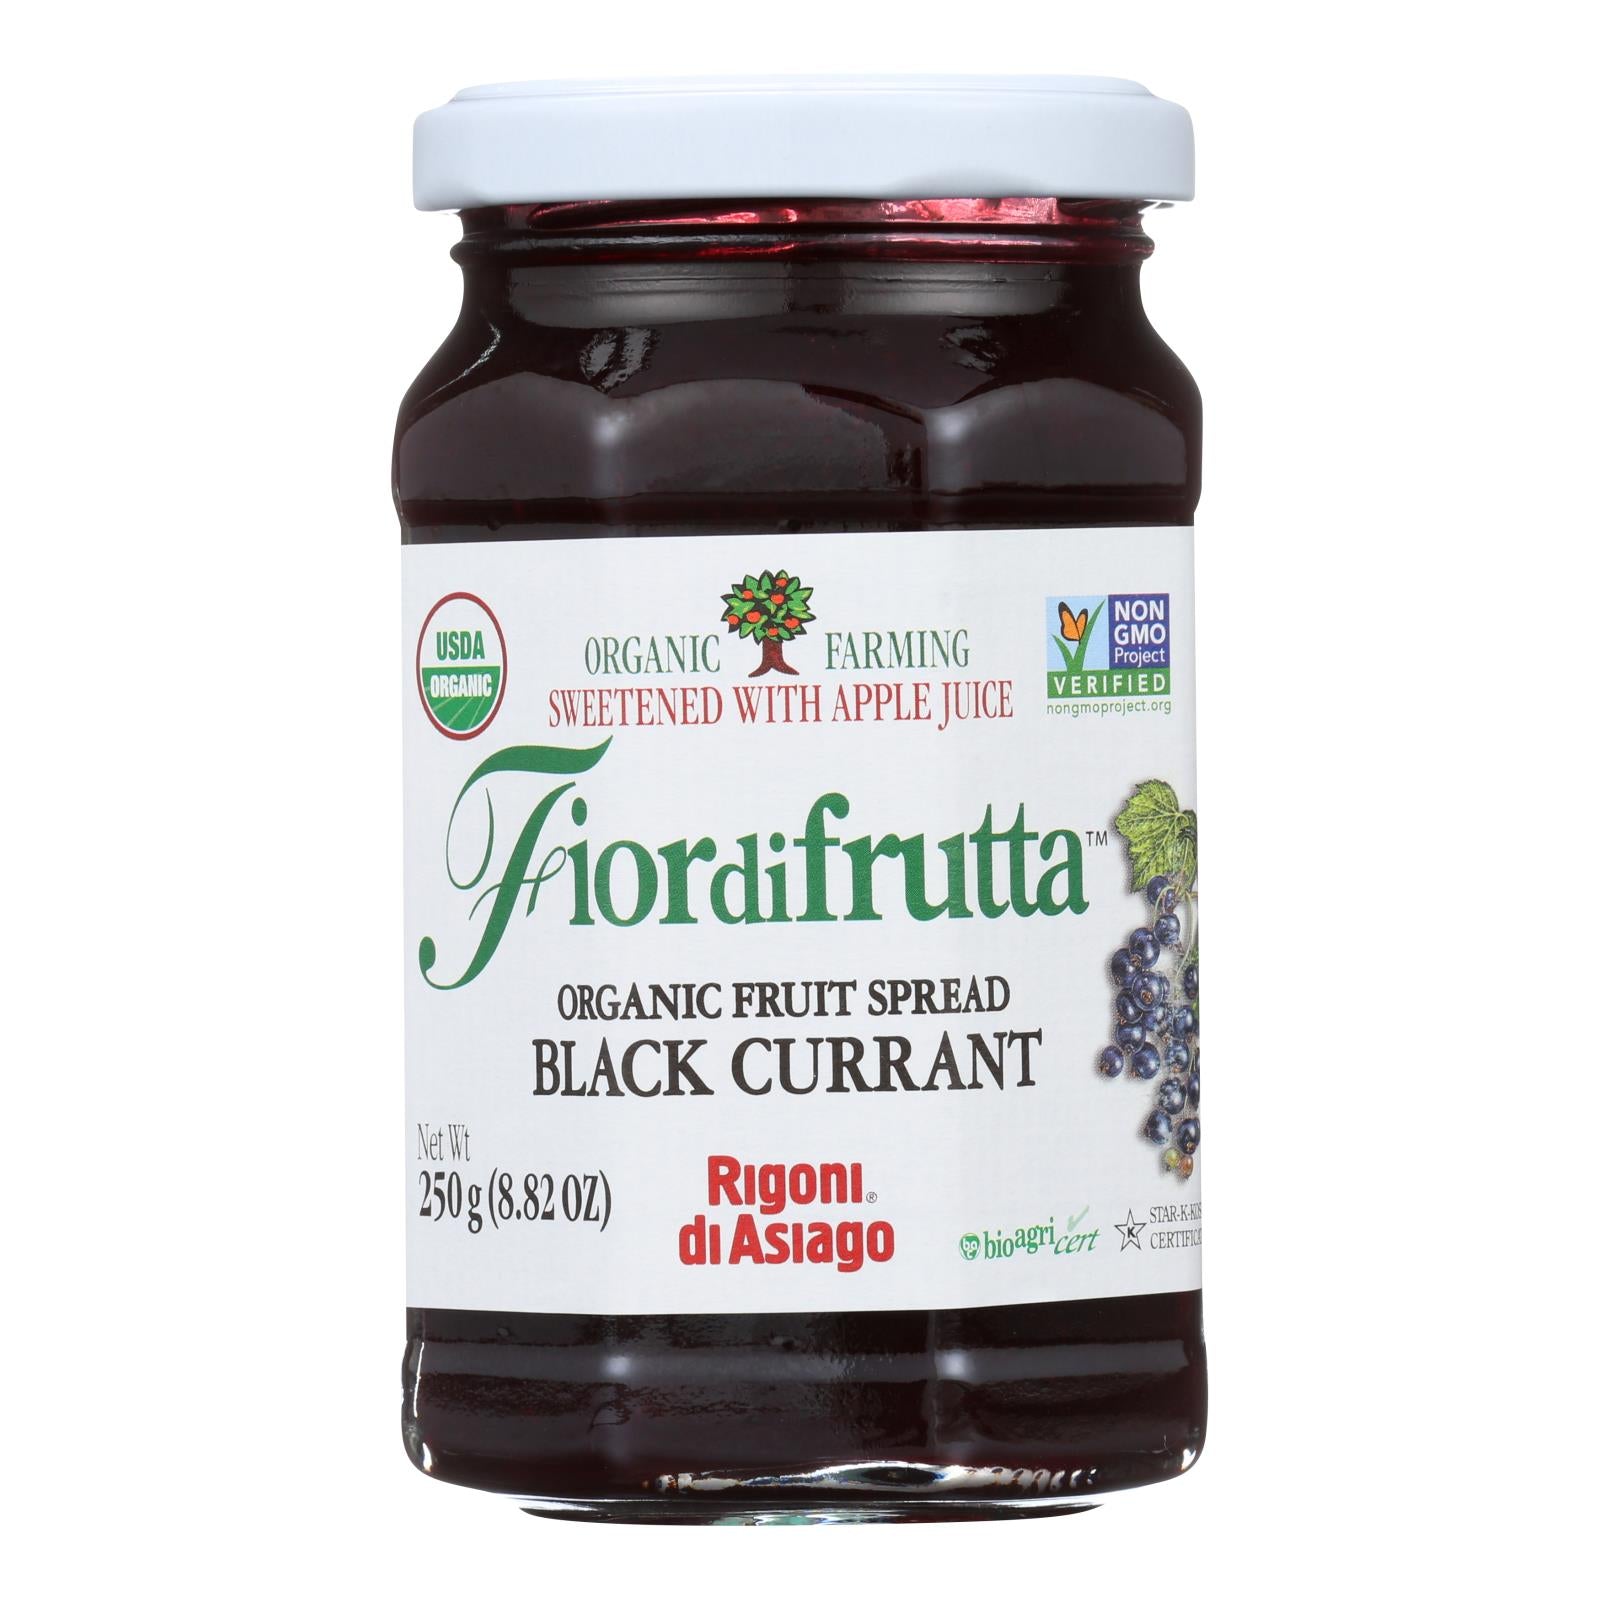 Fiordifrutta Black Currant Fruit Spread  - Case Of 6 - 8.82 Oz